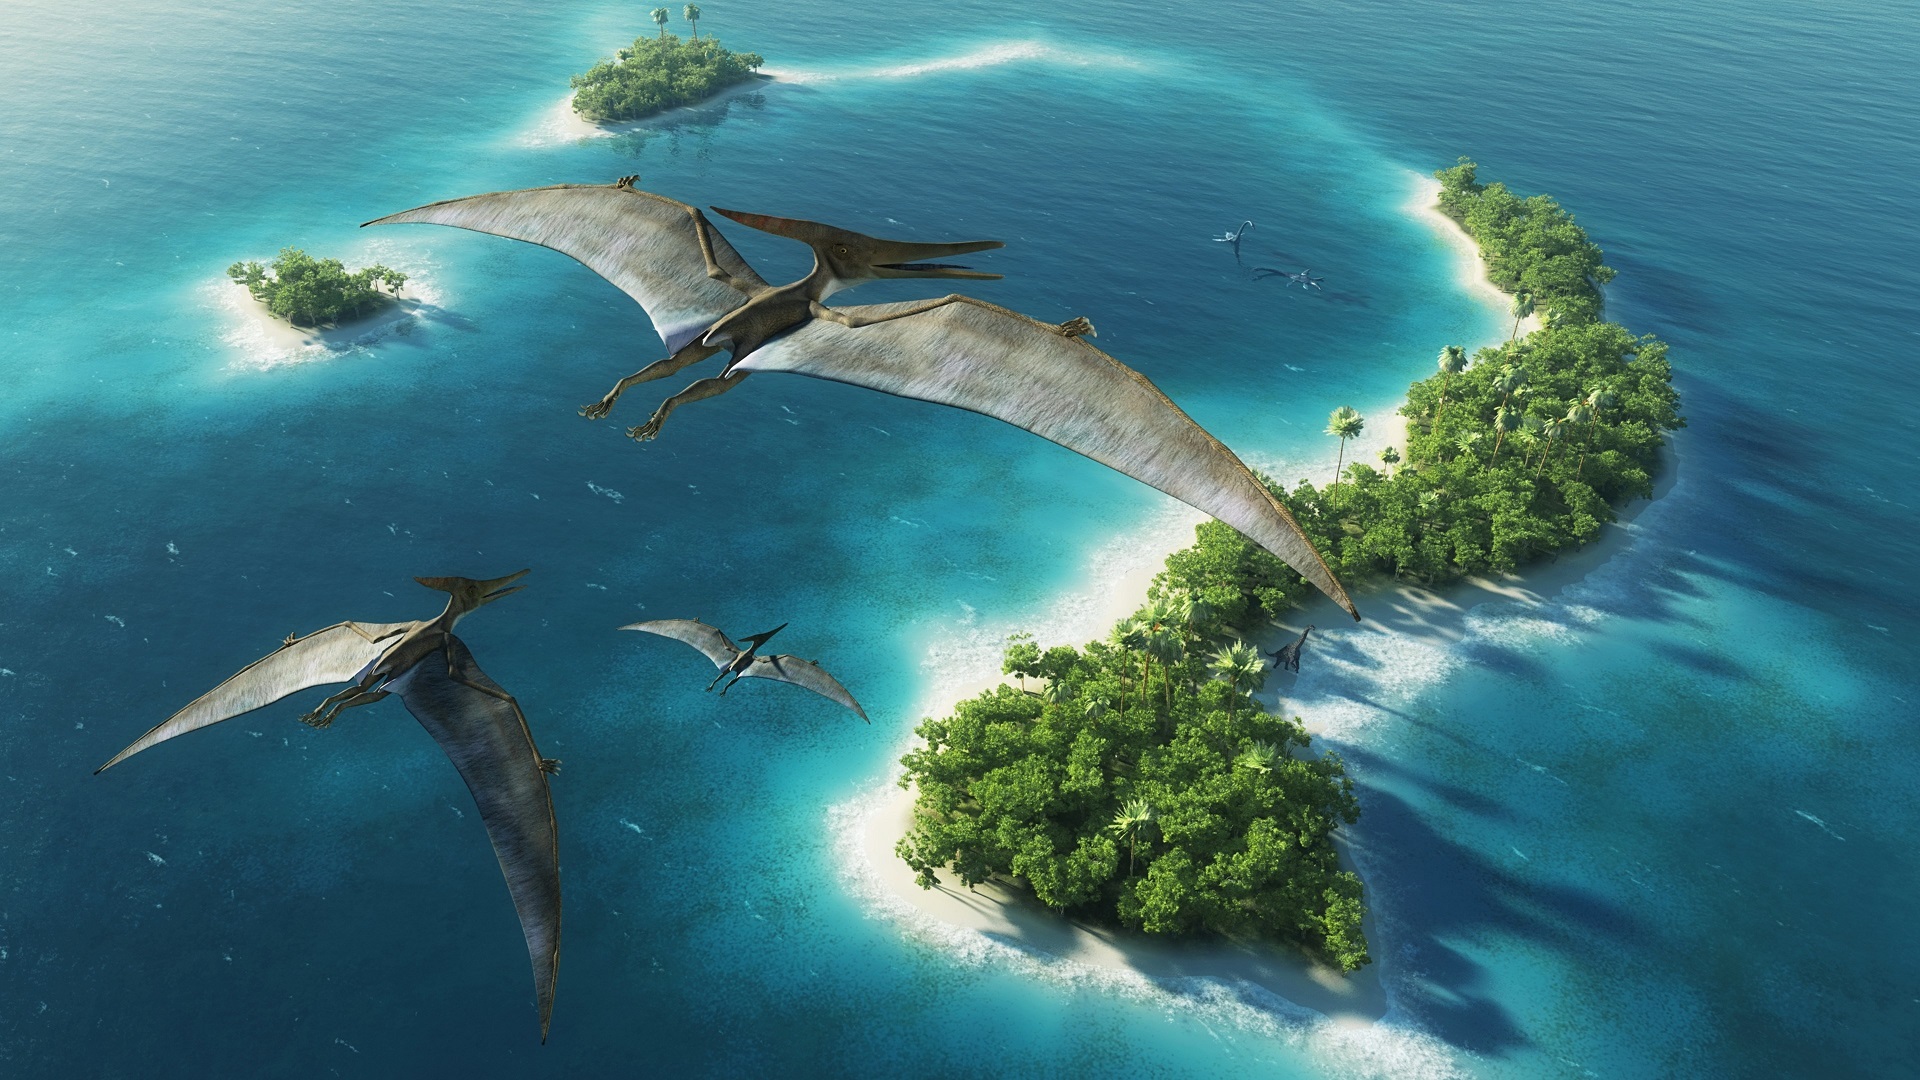 General 1920x1080 dinosaurs nature landscape artwork digital art Pteranodon sea island trees forest aerial view